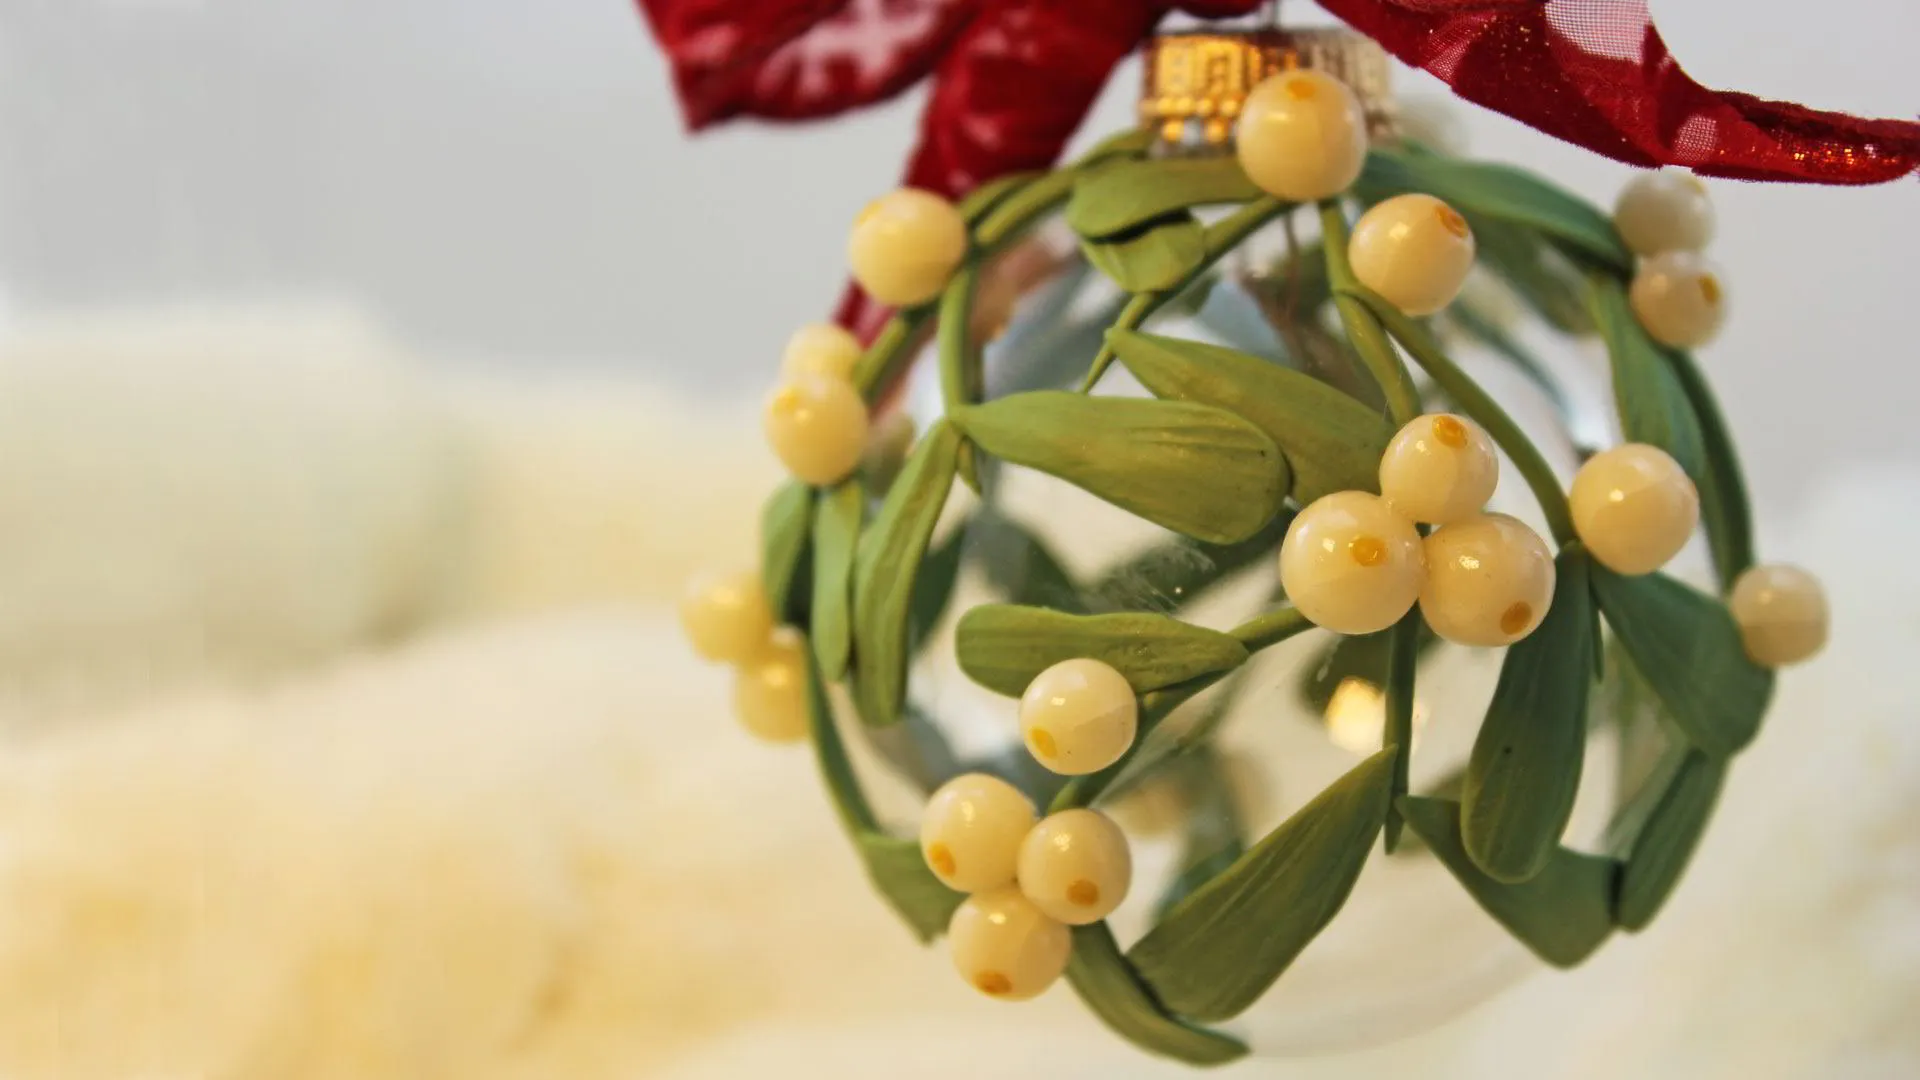 Vol-055 Mistletoe Berry Cane & Leaf Ornament Christmas Glass Ball or Jewelry